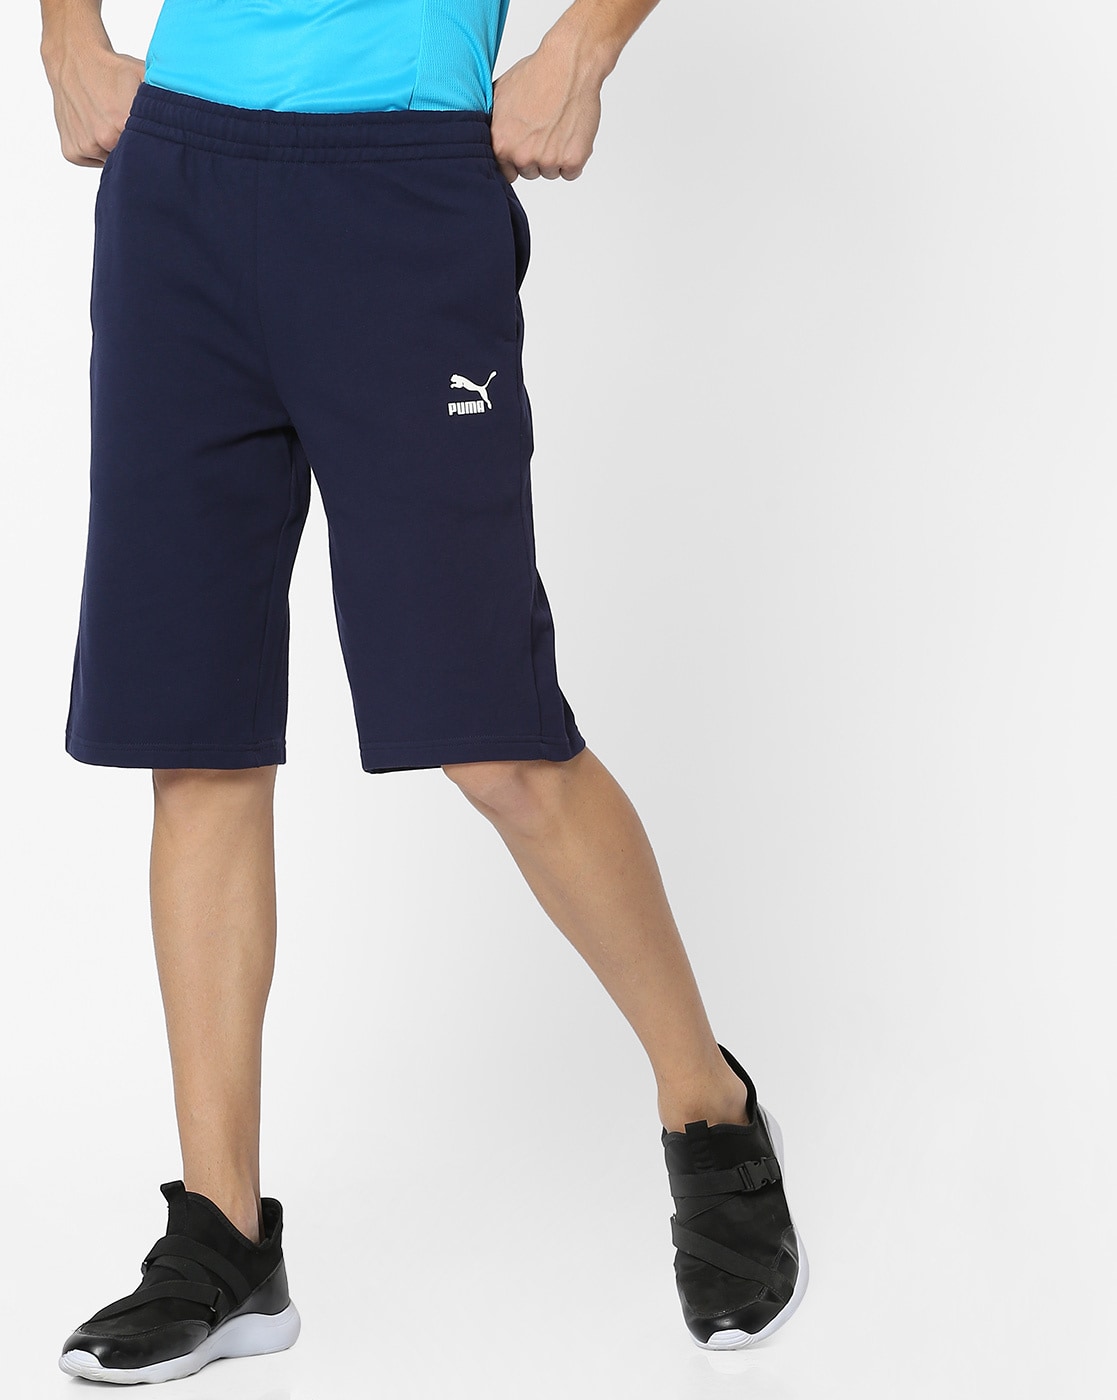 navy blue puma shorts